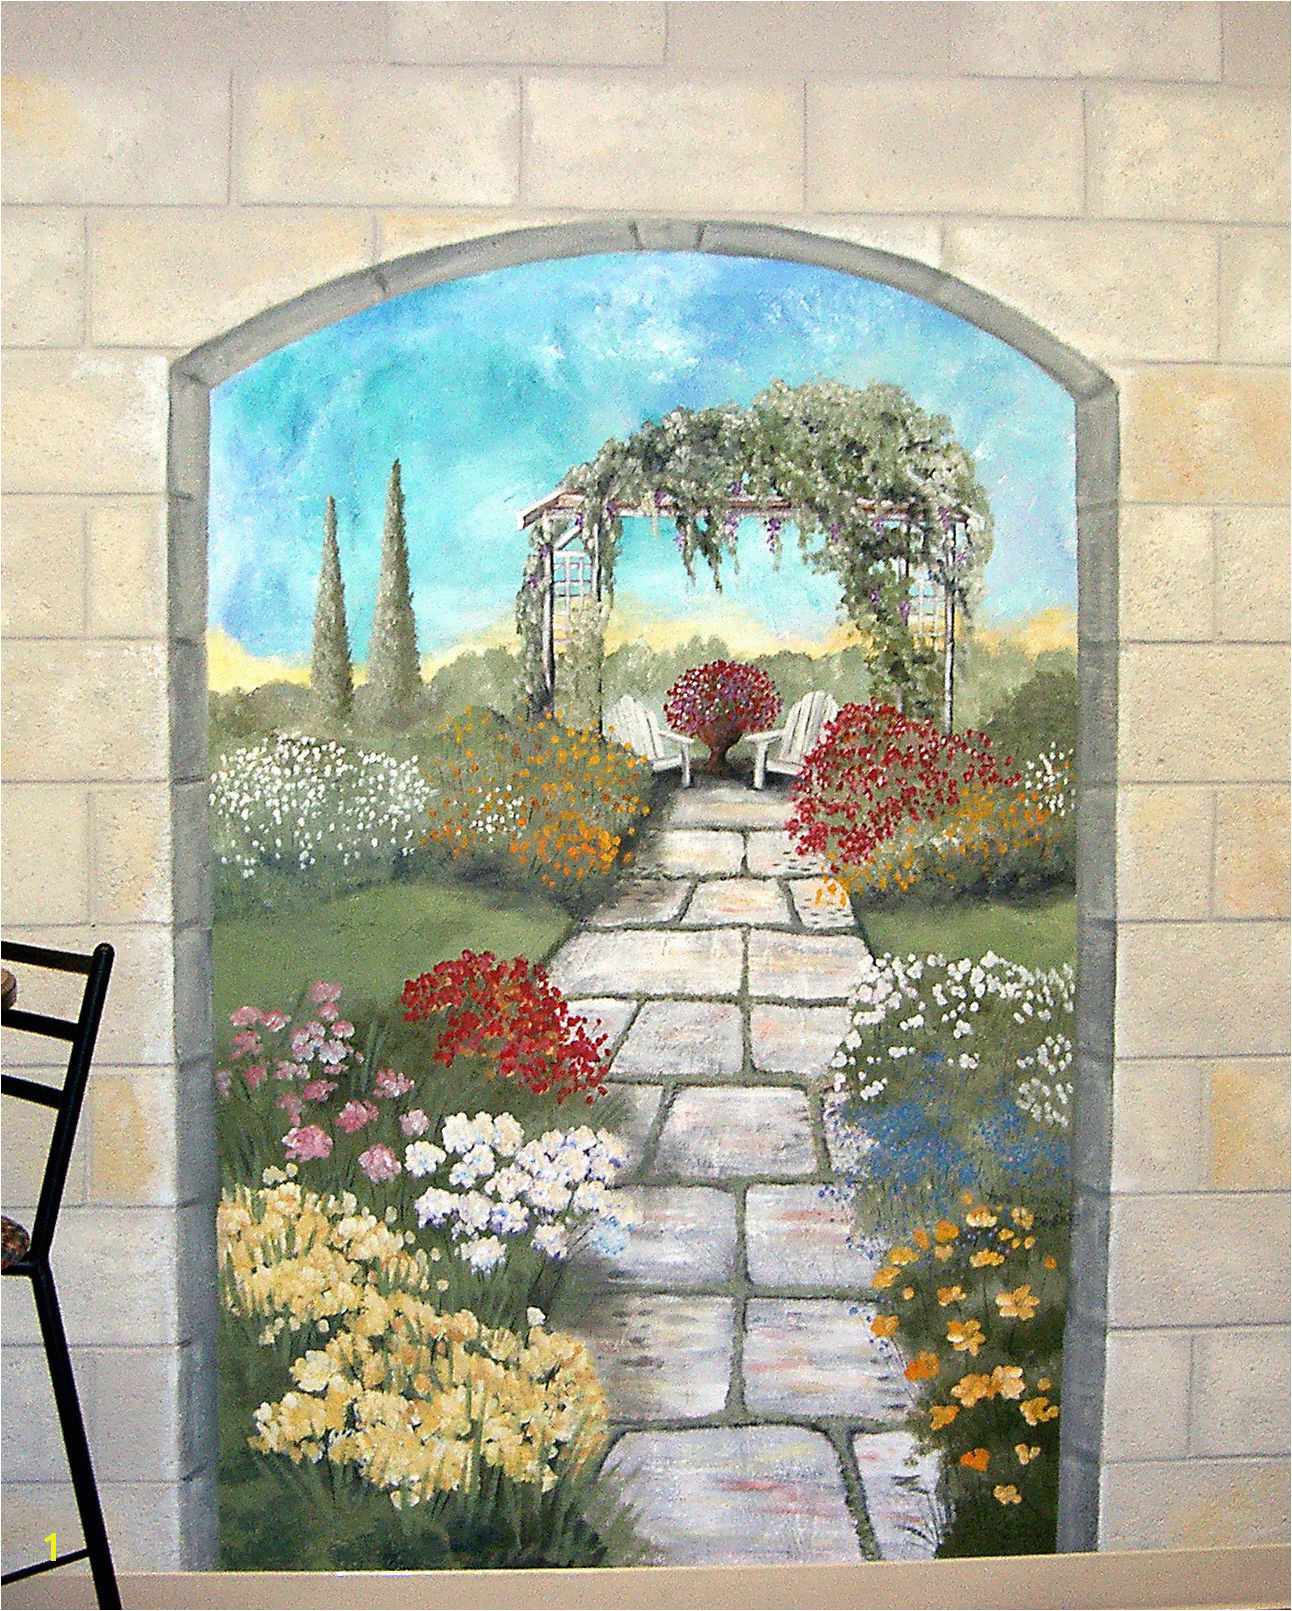 Outside Murals for Walls Garden Mural On A Cement Block Wall Colorful Flower Garden Mural